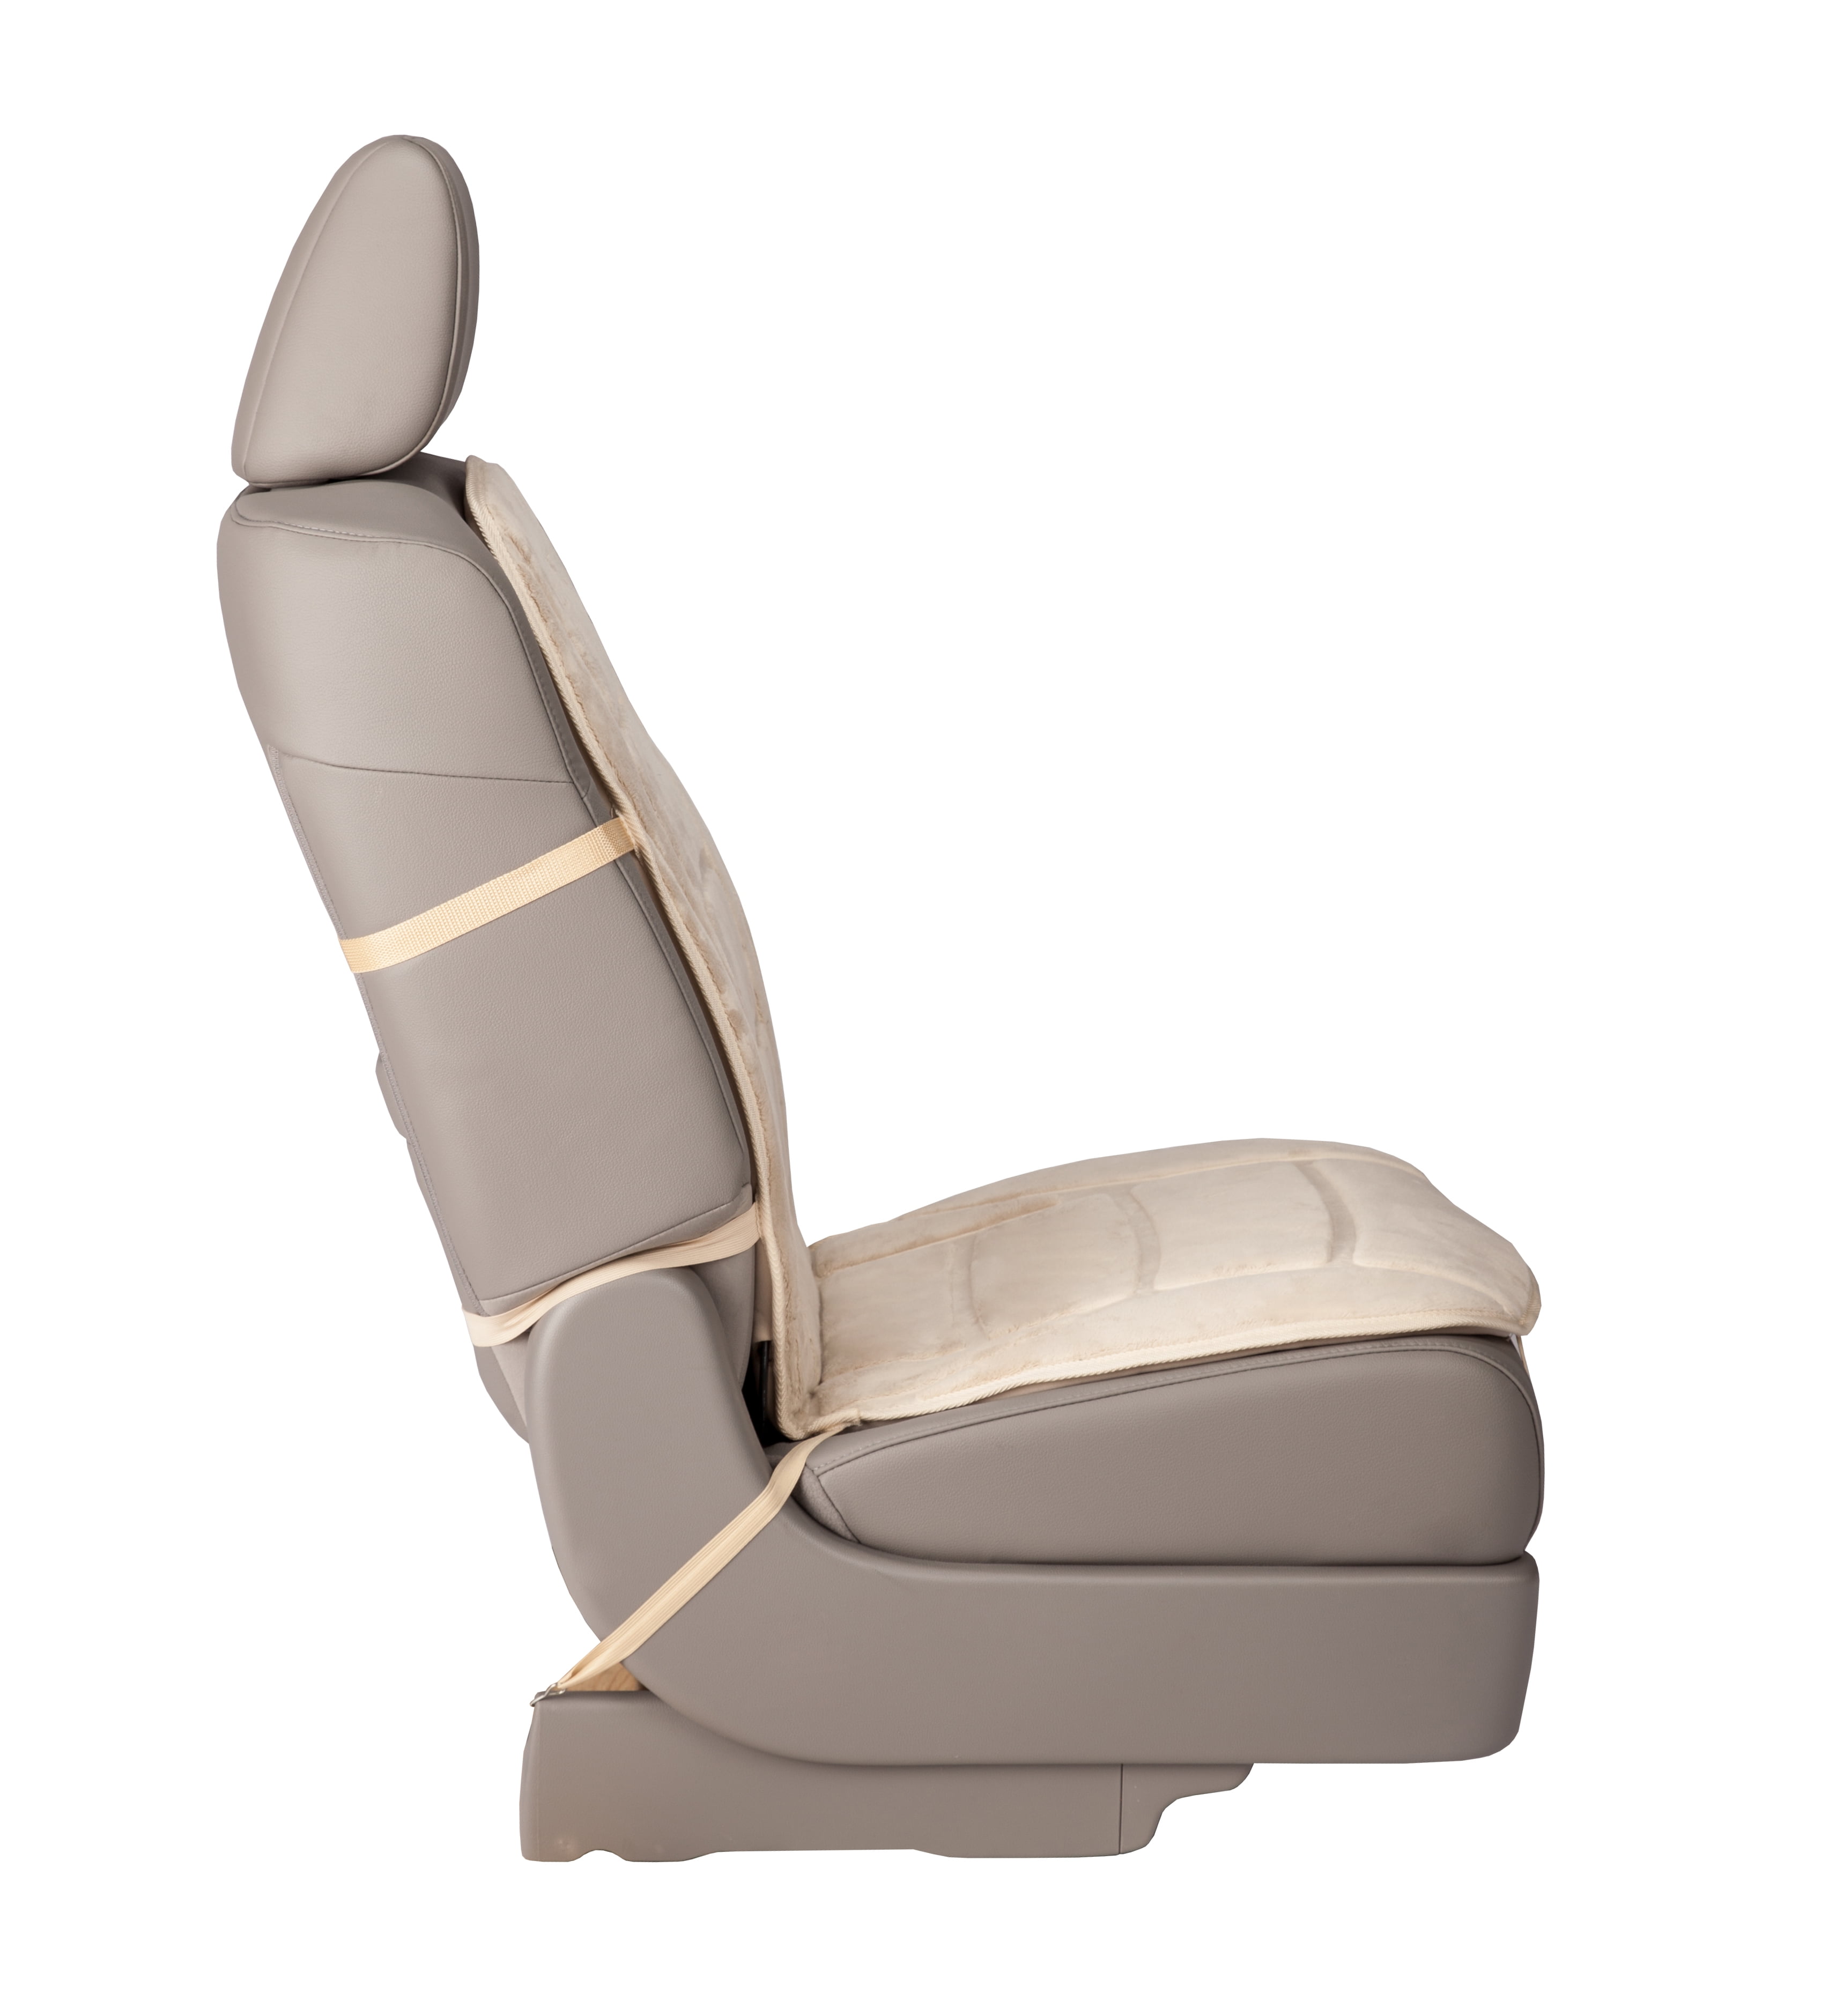 Best Sellers: Best Automotive Seat Cushions